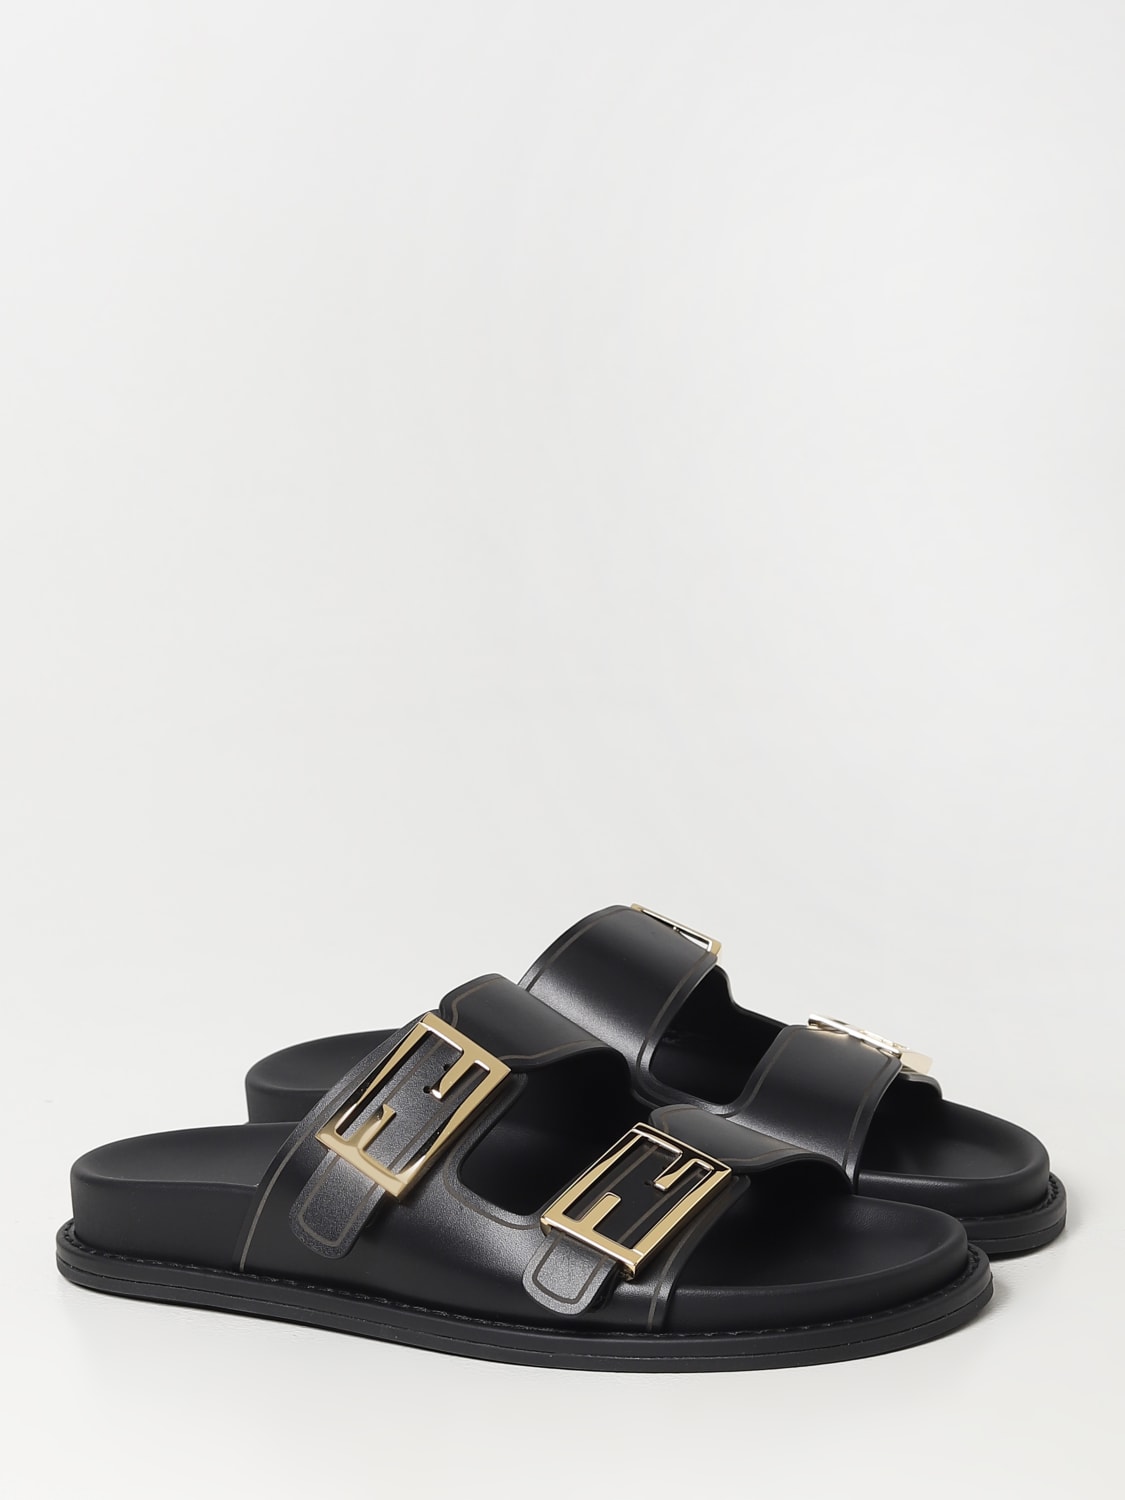 FENDI: Feel sandals in smooth leather - Black | Fendi flat sandals ...